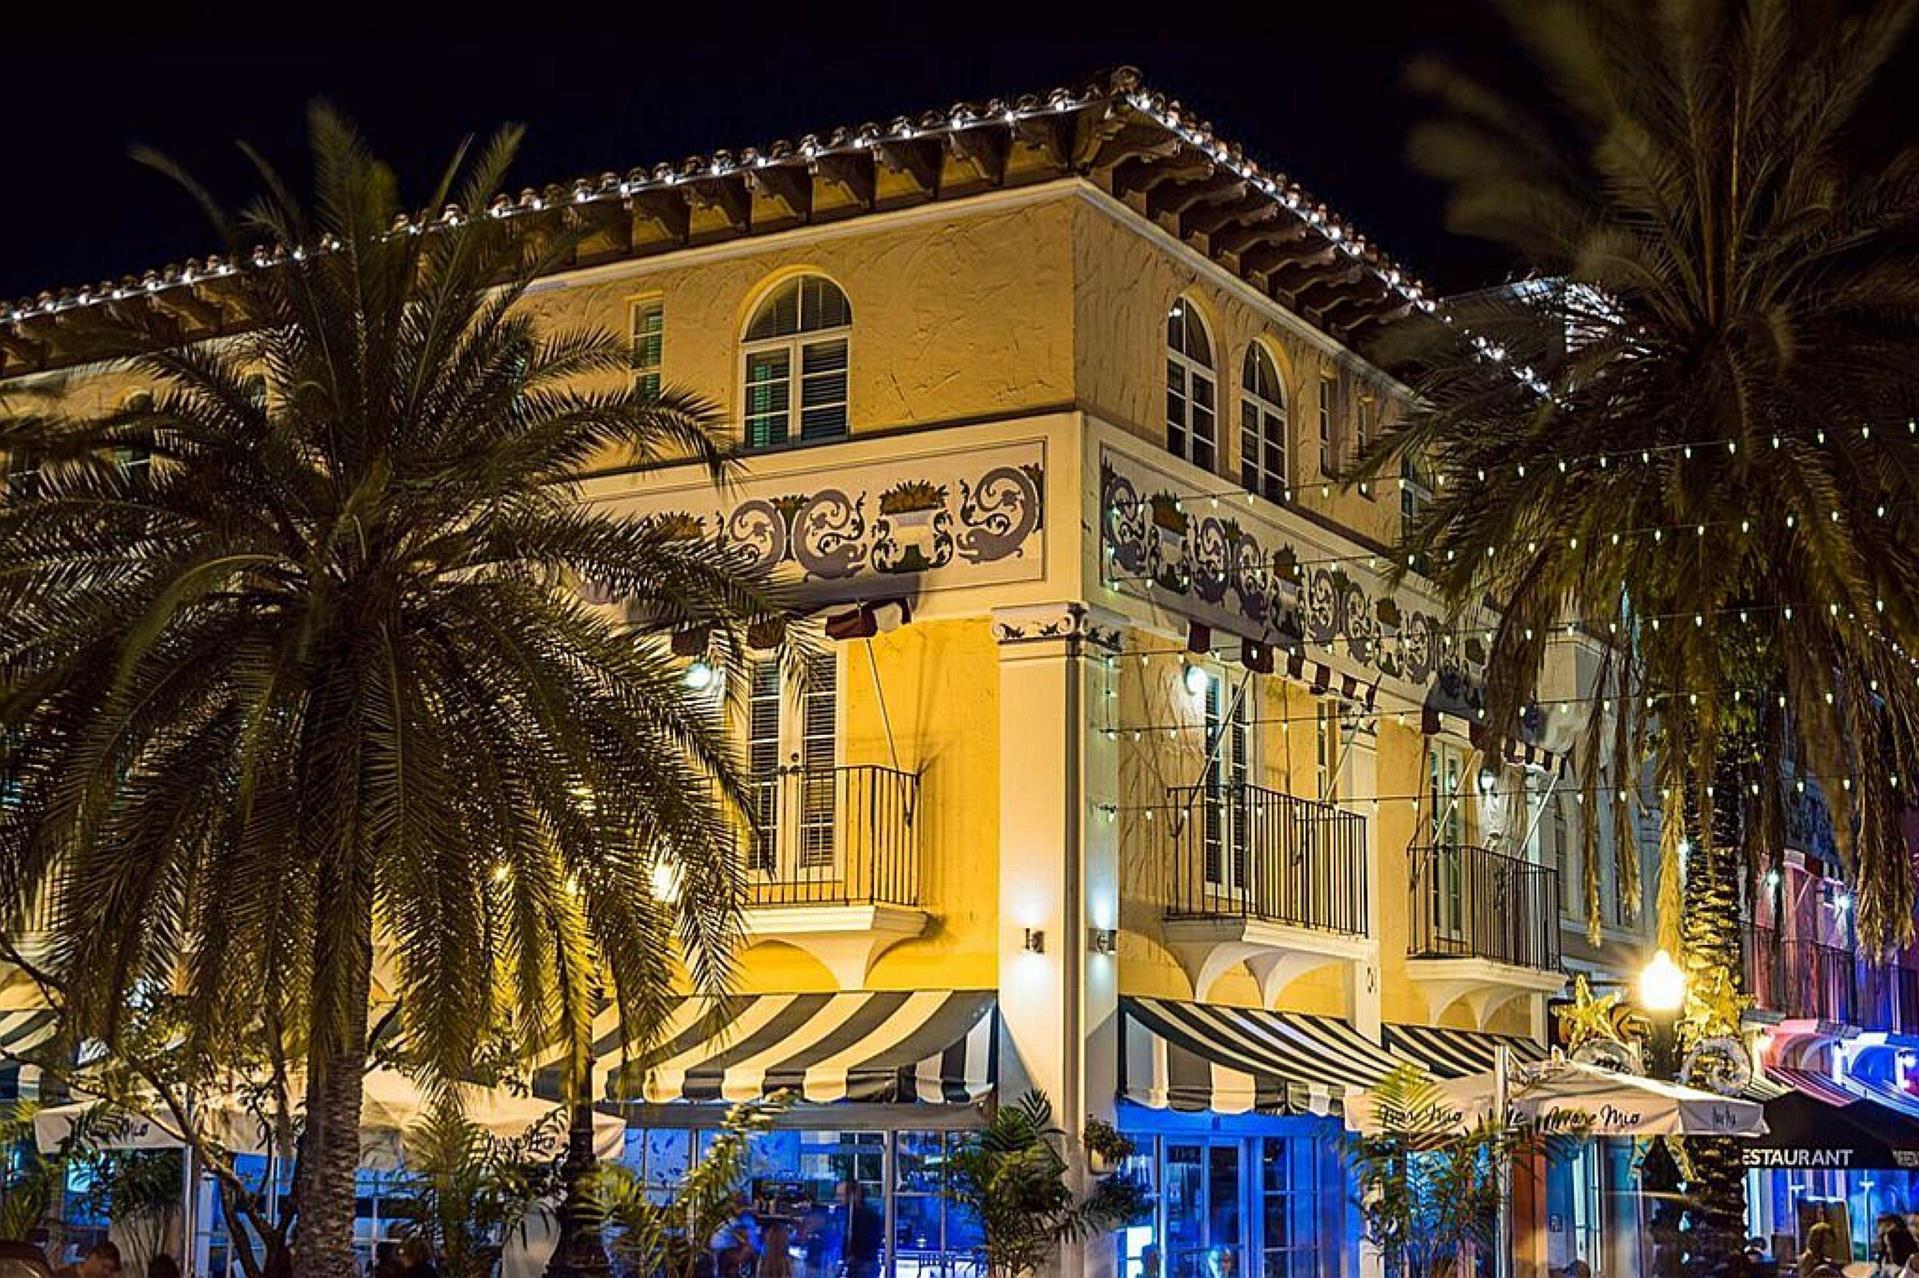 El Paseo Hotel in Miami Beach, FL